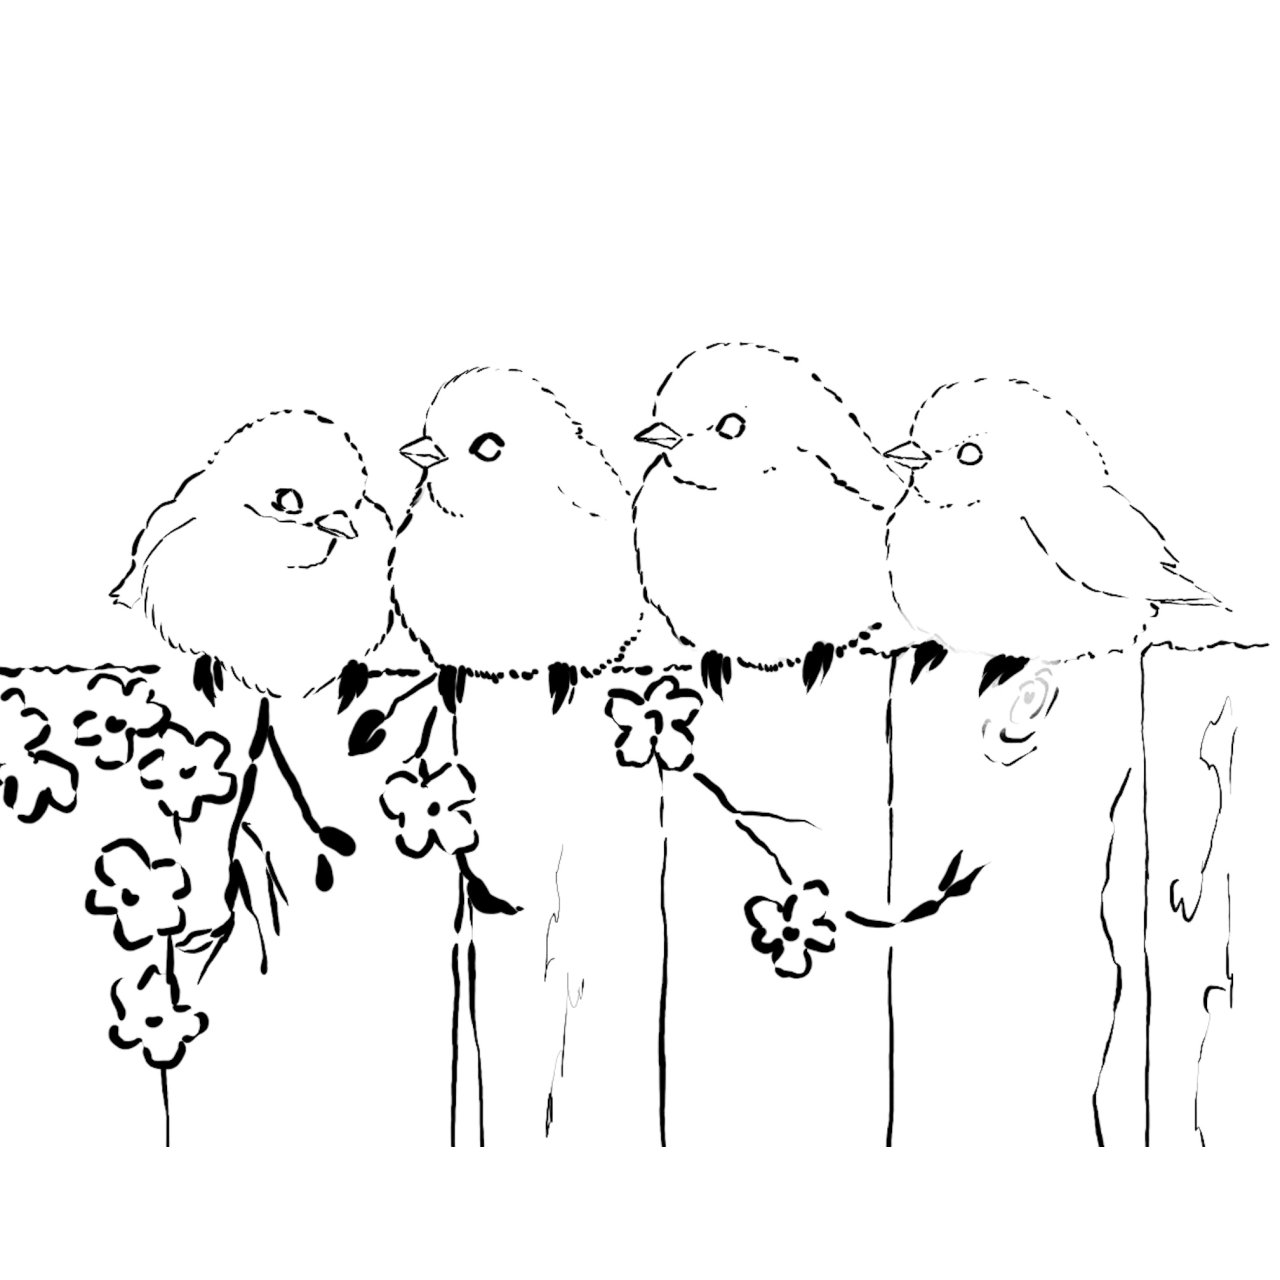 Fluffy birds on a fence 2023 